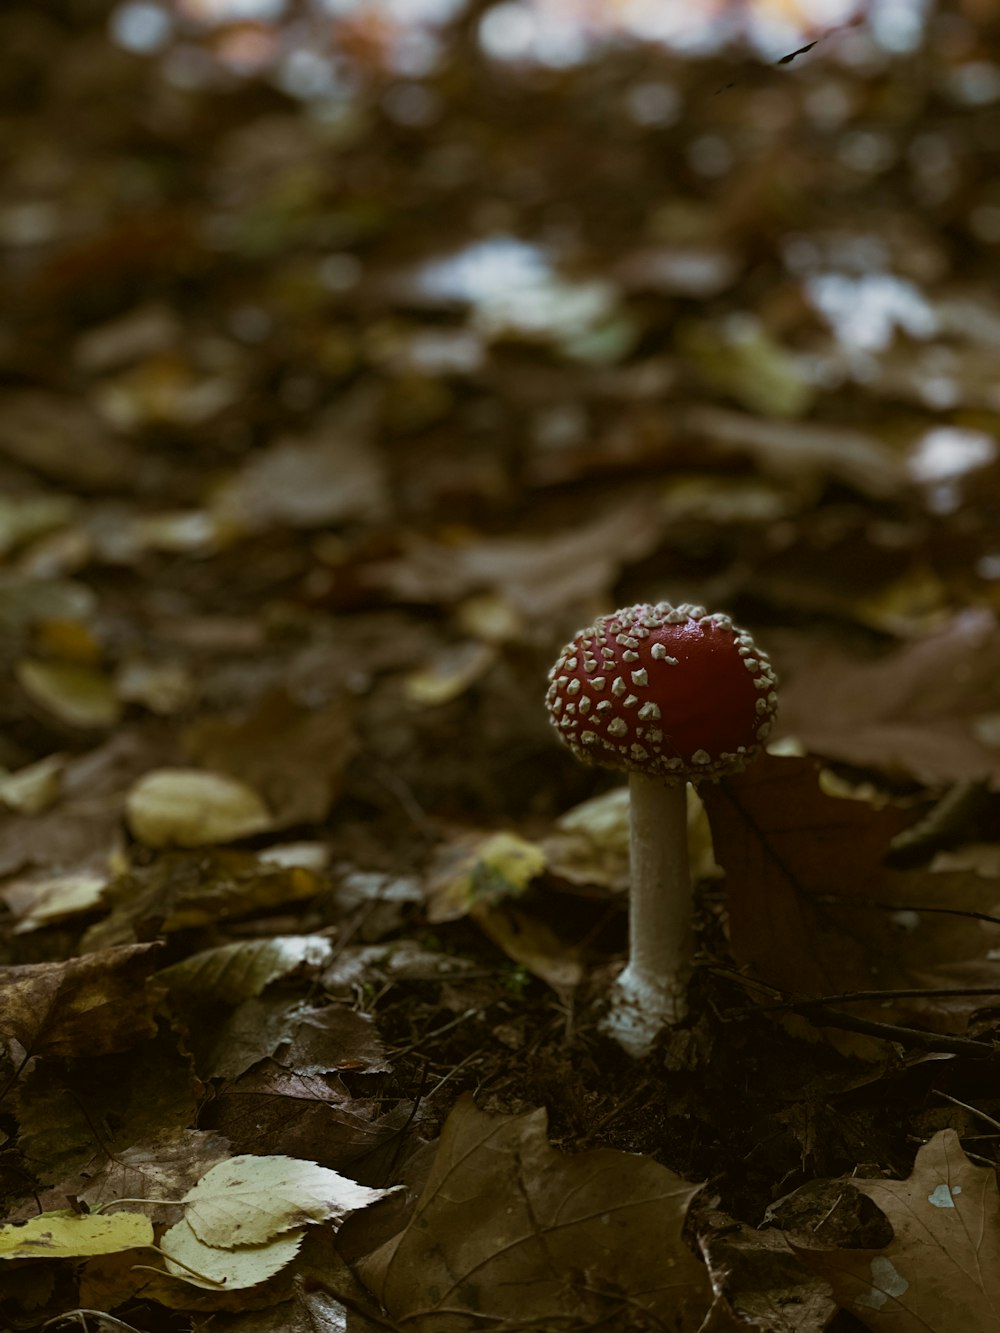 a red mushroom growing in the leaves